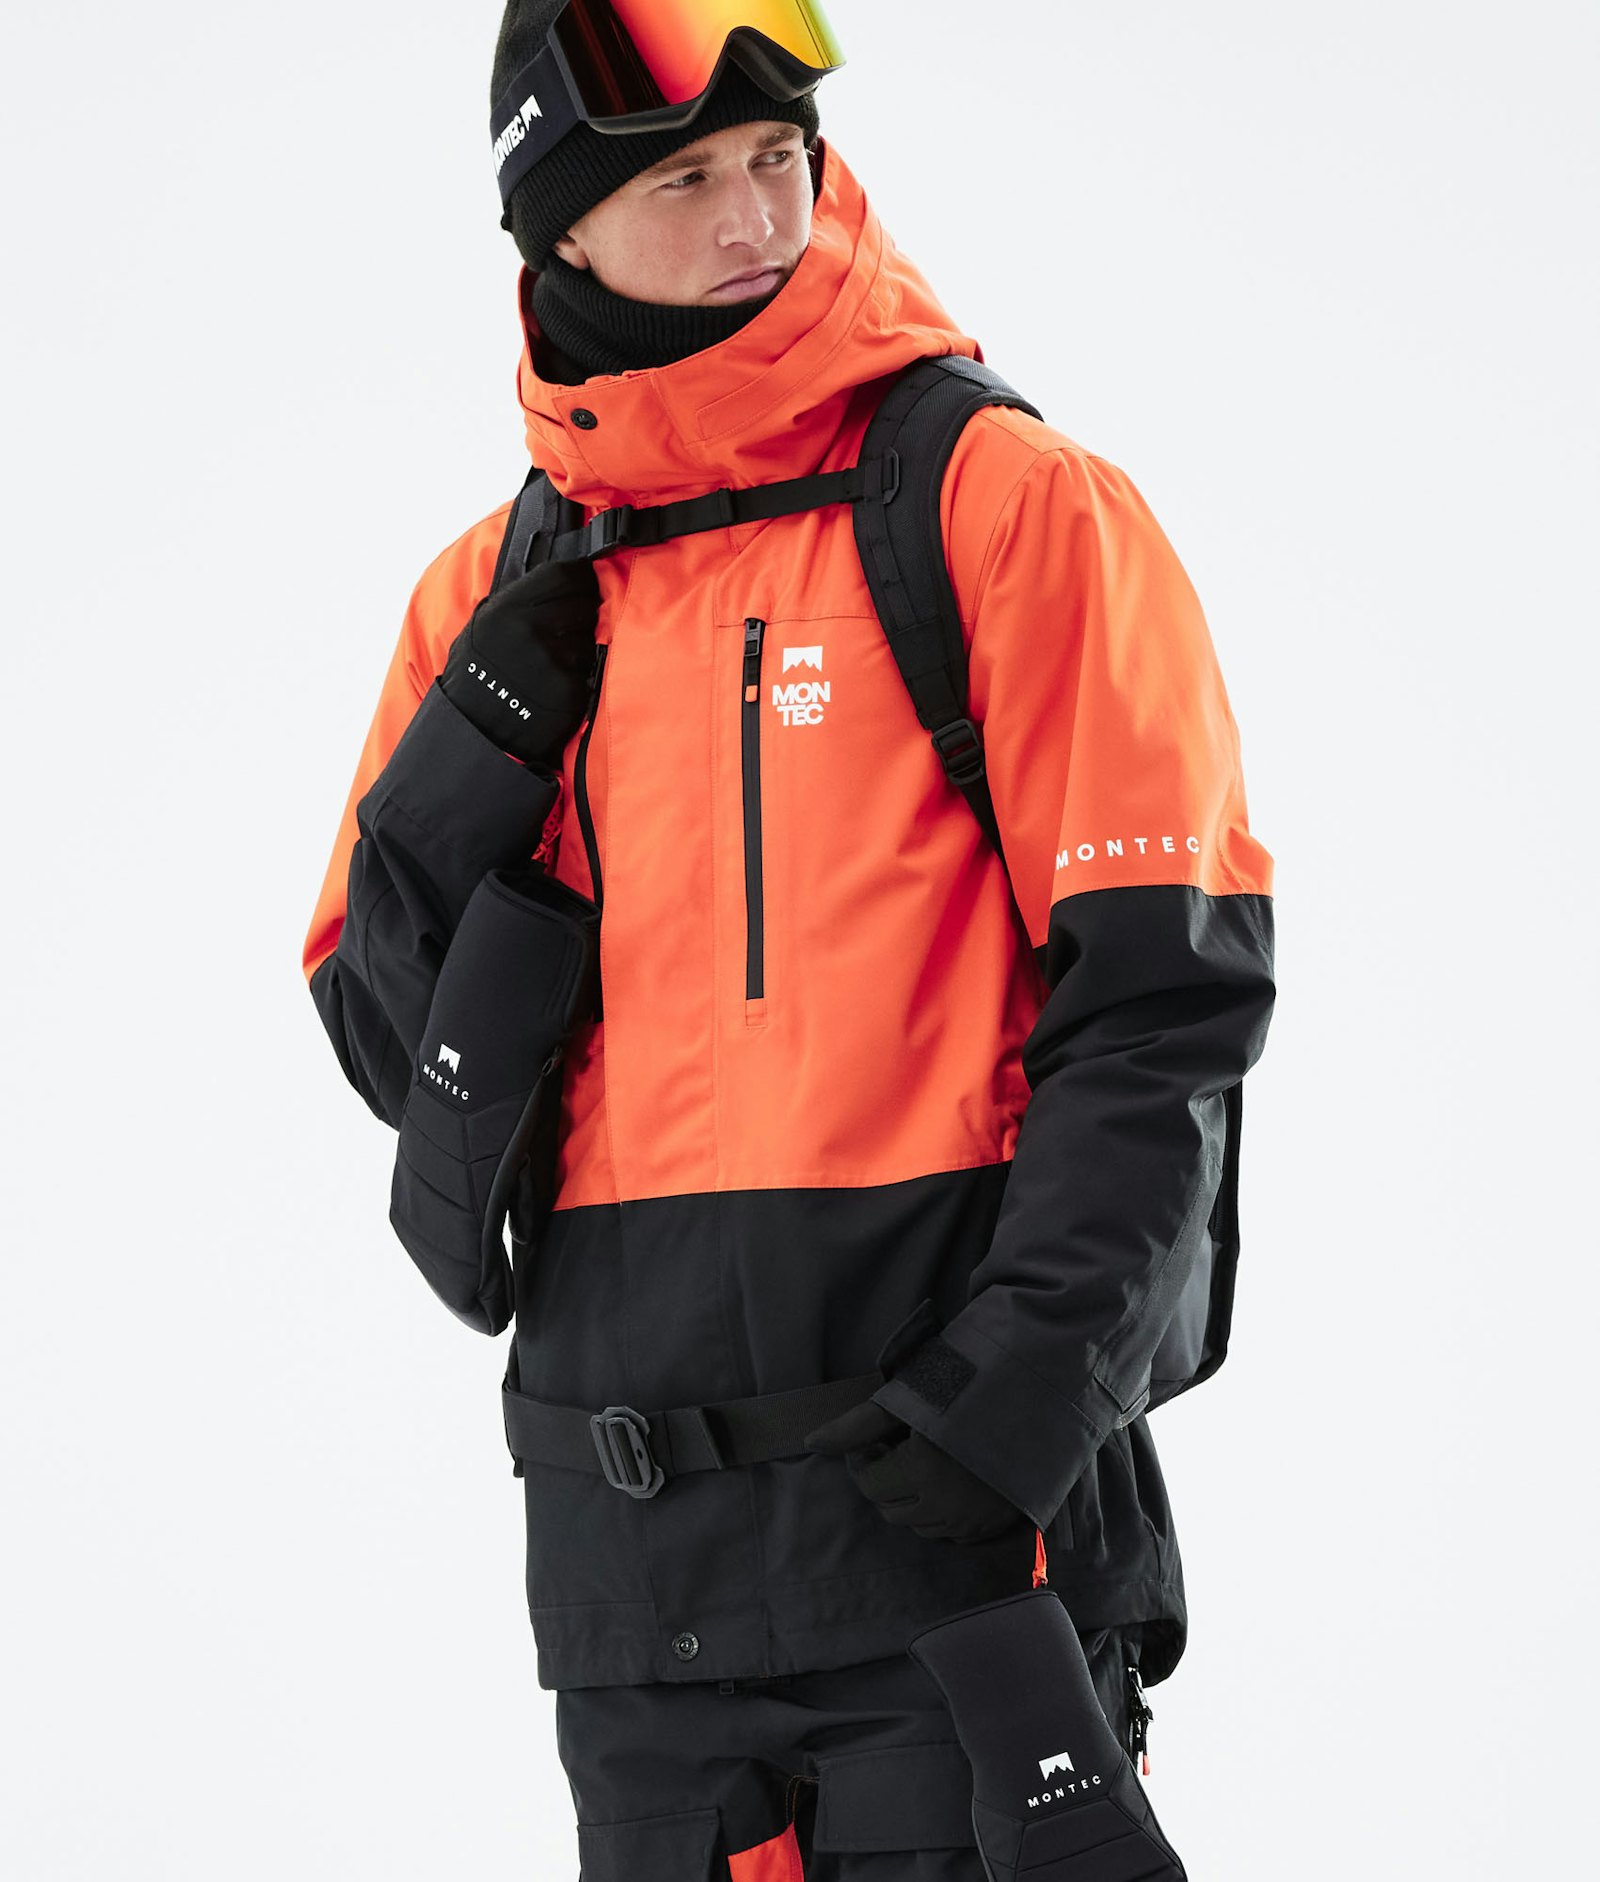 Fawk 2021 Skijacke Herren Orange/Black